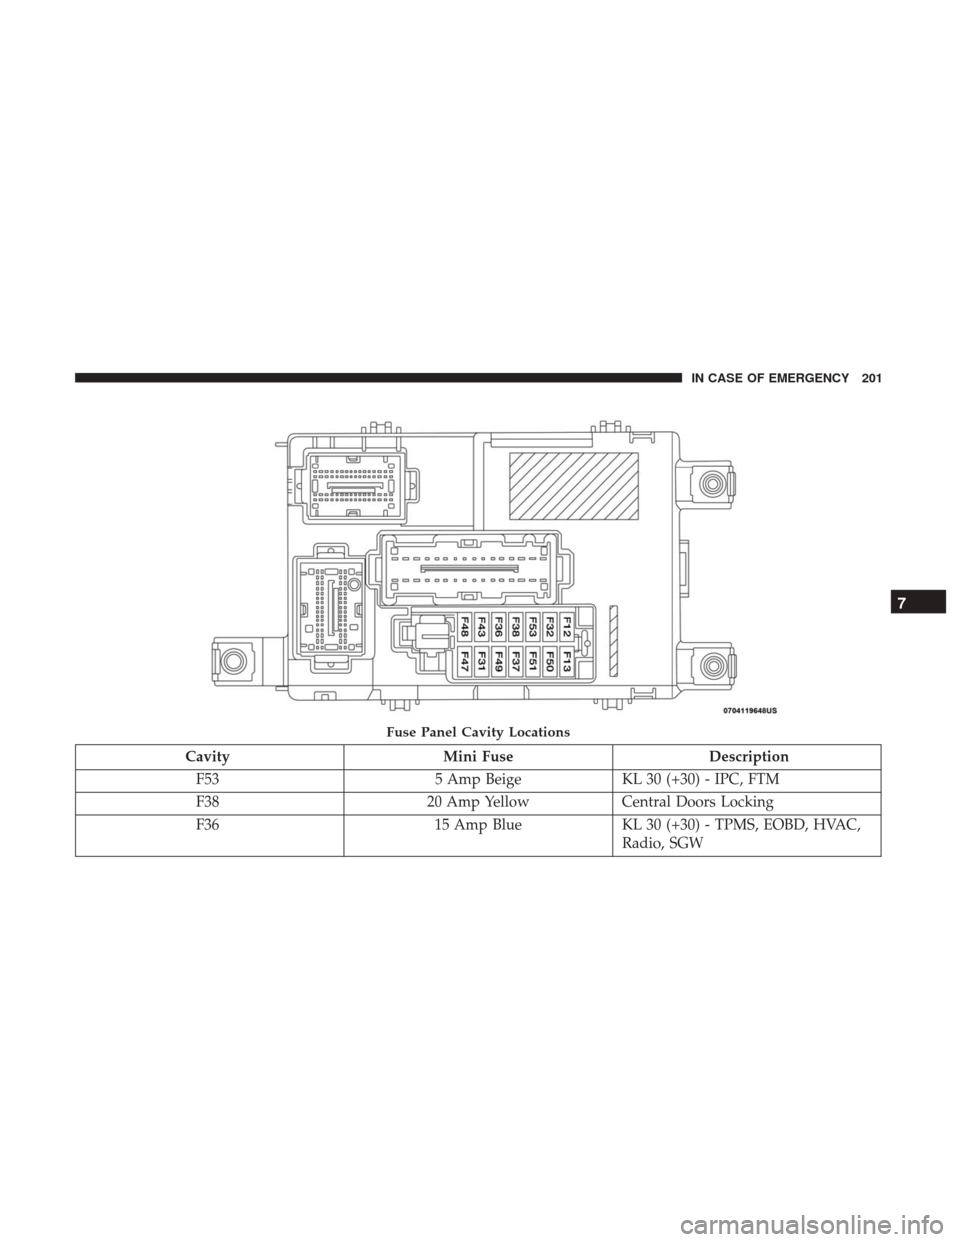 Ram ProMaster City 2019  Owners Manual CavityMini Fuse Description
F53 5 Amp BeigeKL 30 (+30) - IPC, FTM
F38 20 Amp YellowCentral Doors Locking
F36 15 Amp BlueKL 30 (+30) - TPMS, EOBD, HVAC,
Radio, SGW
Fuse Panel Cavity Locations
7
IN CASE